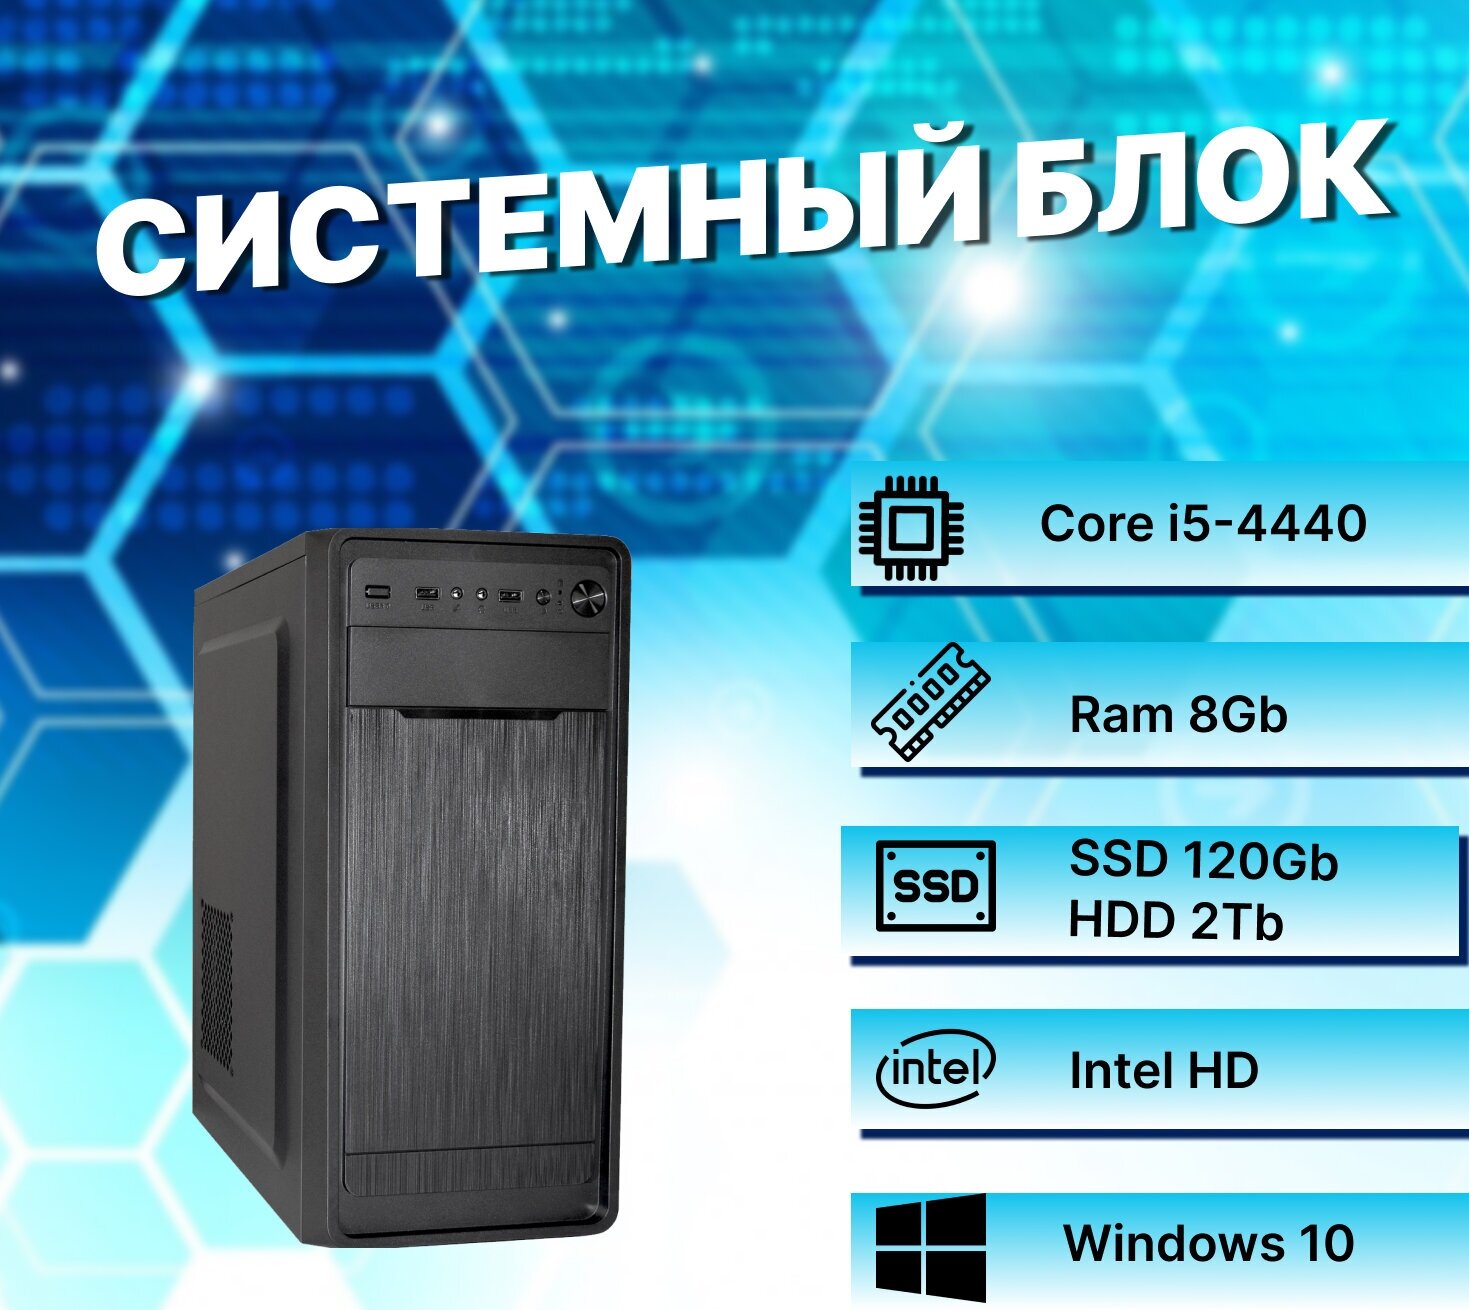 Системный блок Intel Core i5-4440 (3.1ГГц)/ RAM 8Gb/ SSD 120Gb/HDD 2Tb/ Intel HD/ Windows 10 Pro